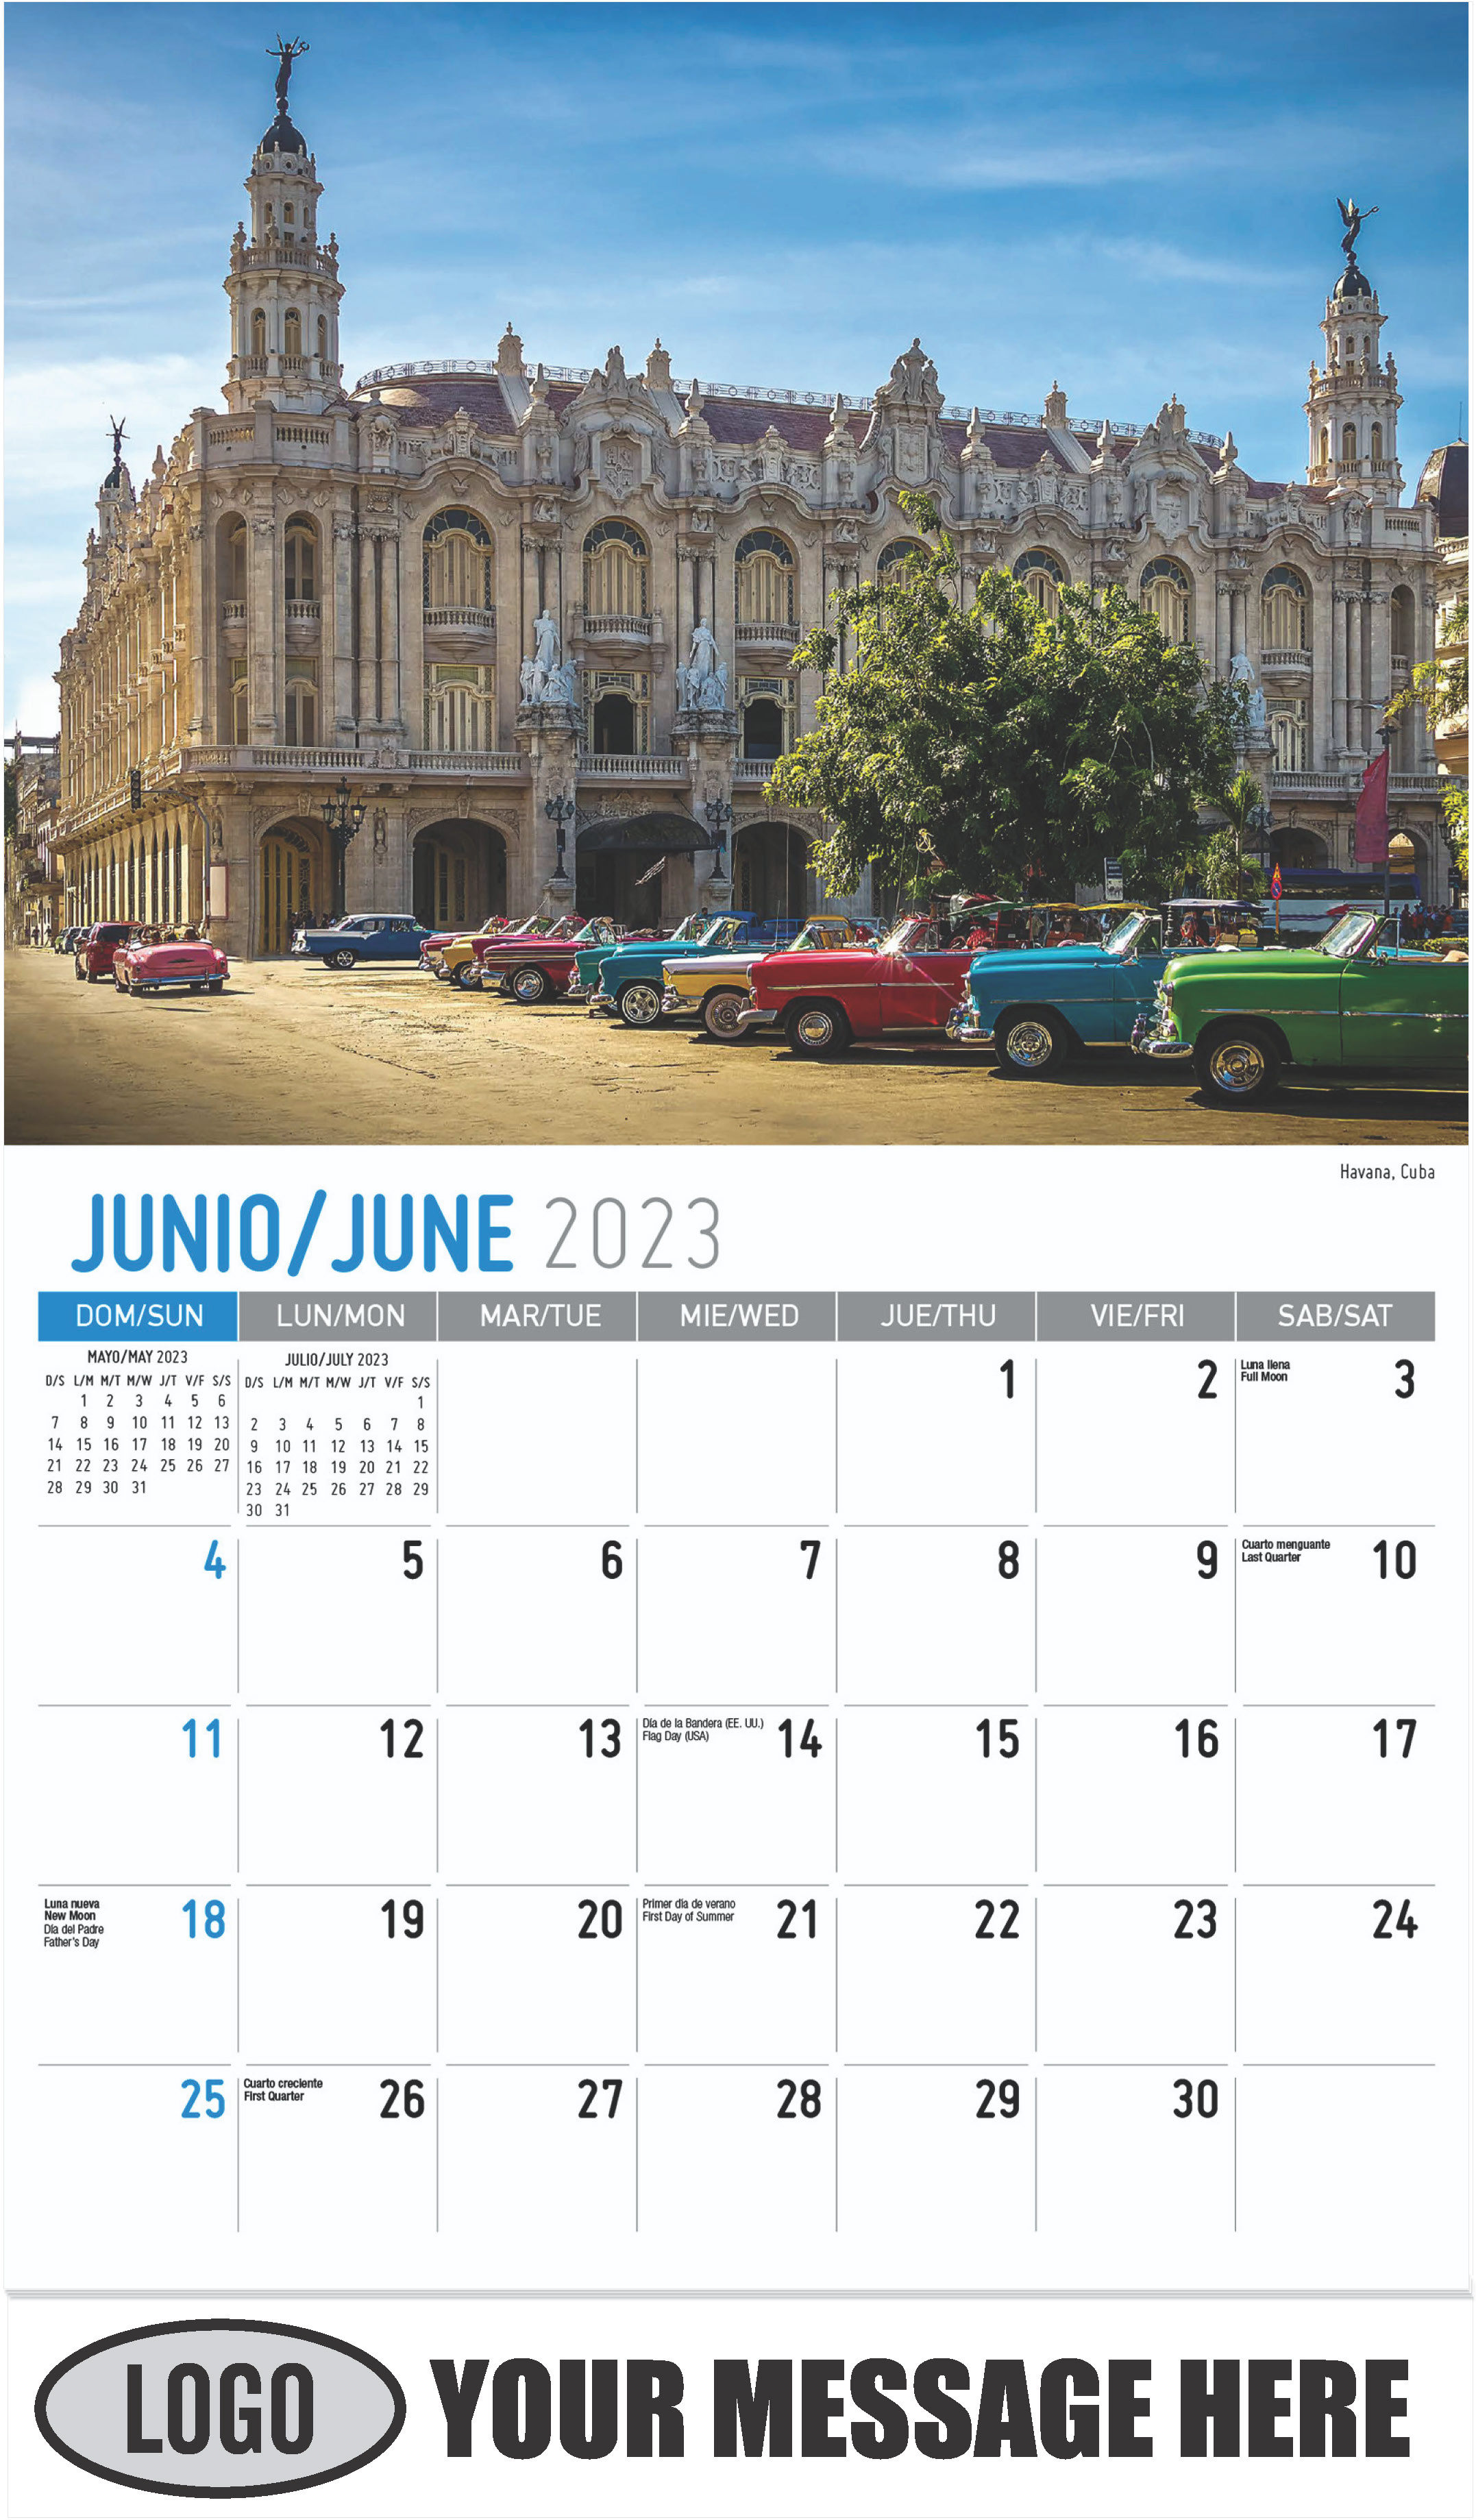 Havana, Cuba - June - Beauty of Latin America 2023 Promotional Calendar